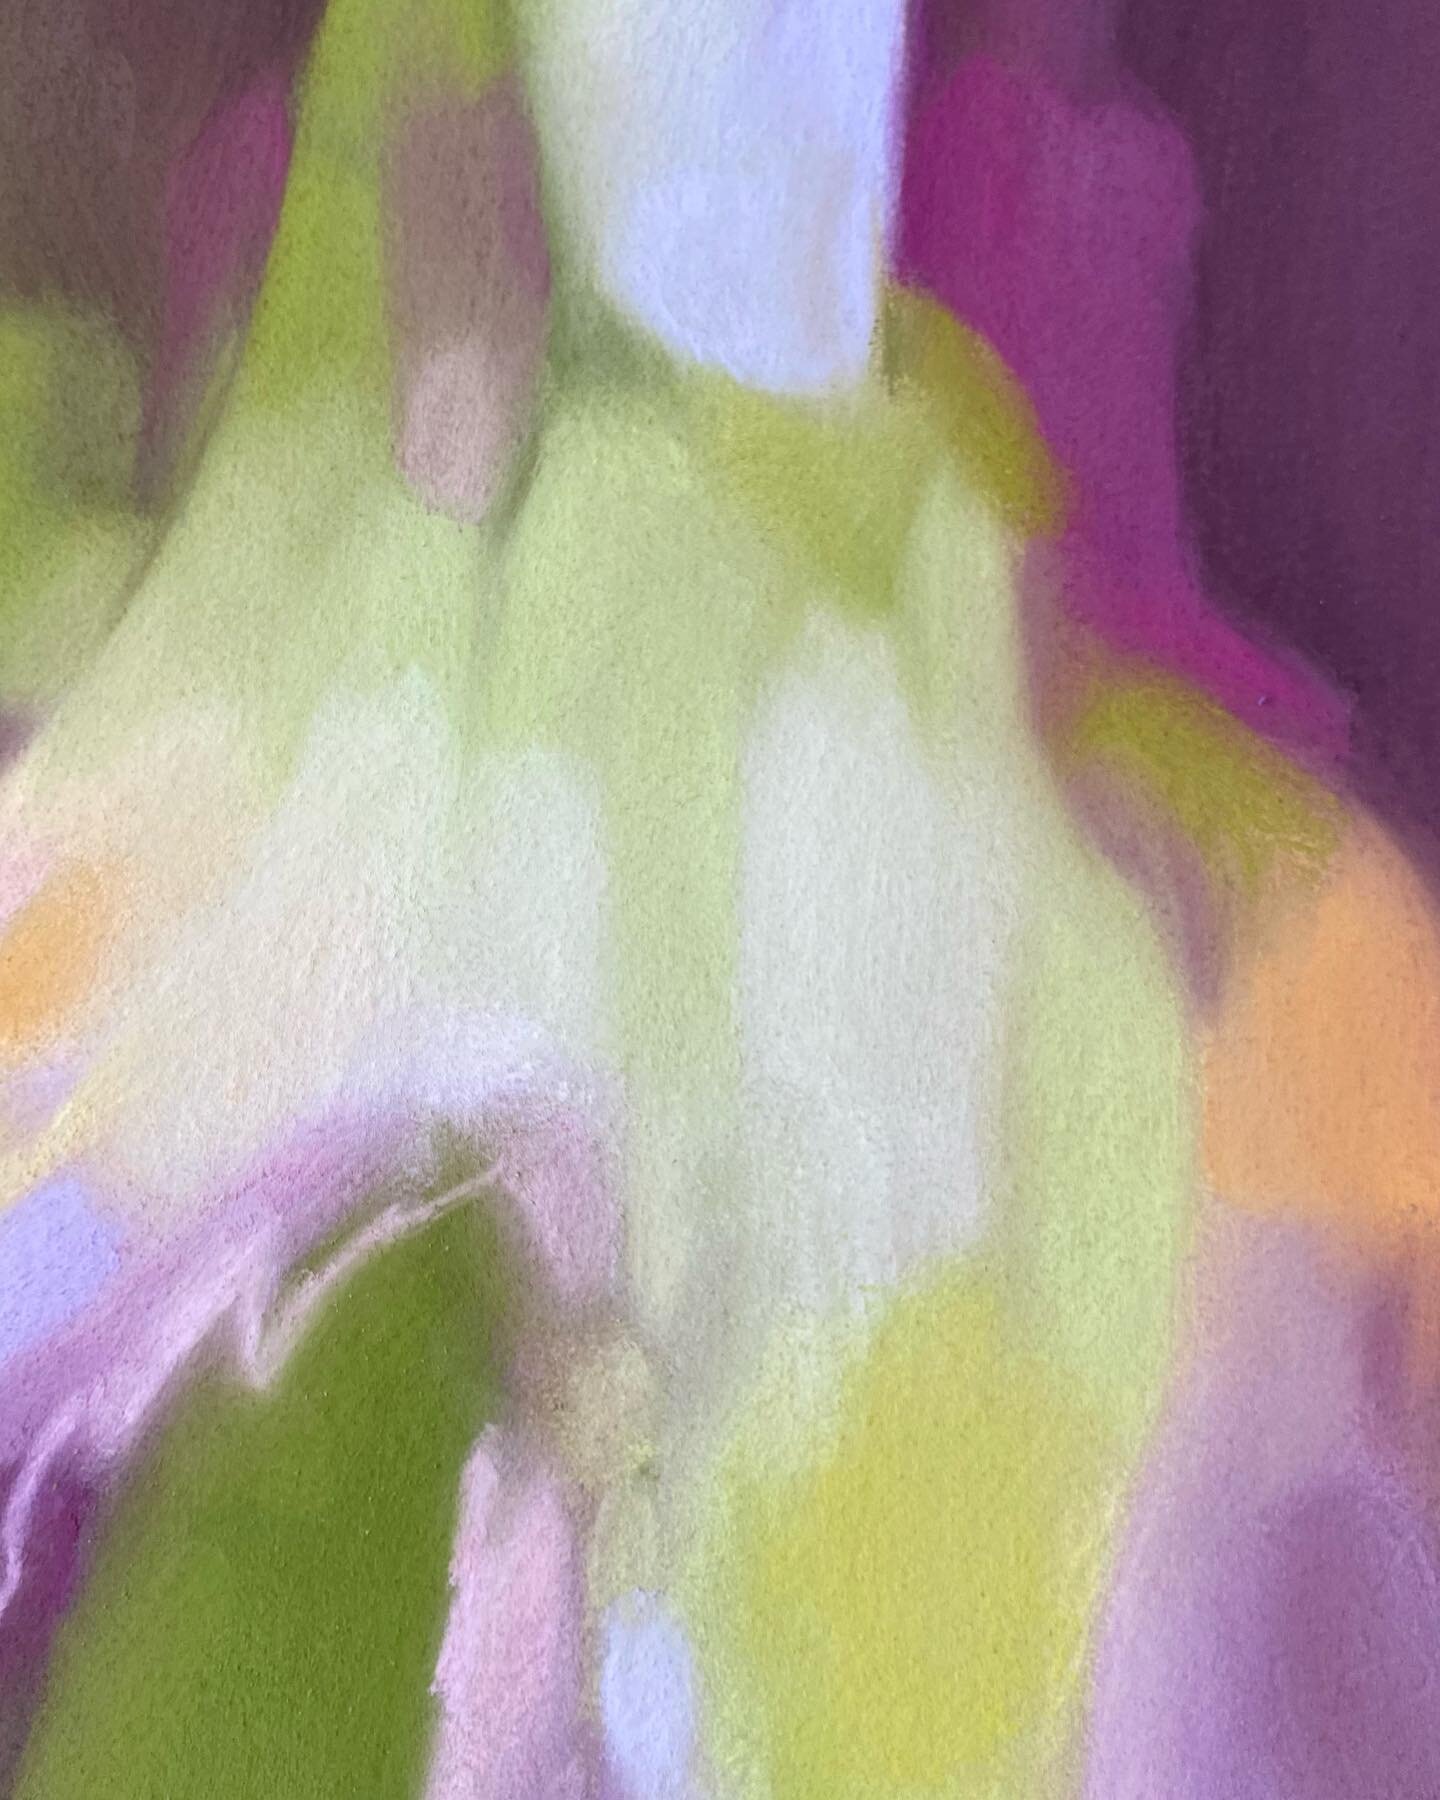 A new palette
I&rsquo;m really enjoying this colour combo!

Work in progress. Detail 

.
.
#kristinholmdybvig #singulart #returnonart #riseart #unisonpastels #pastelart #softpastel #artonpaper #art #artgallery #artcollector #artoftheday #artlover #ar